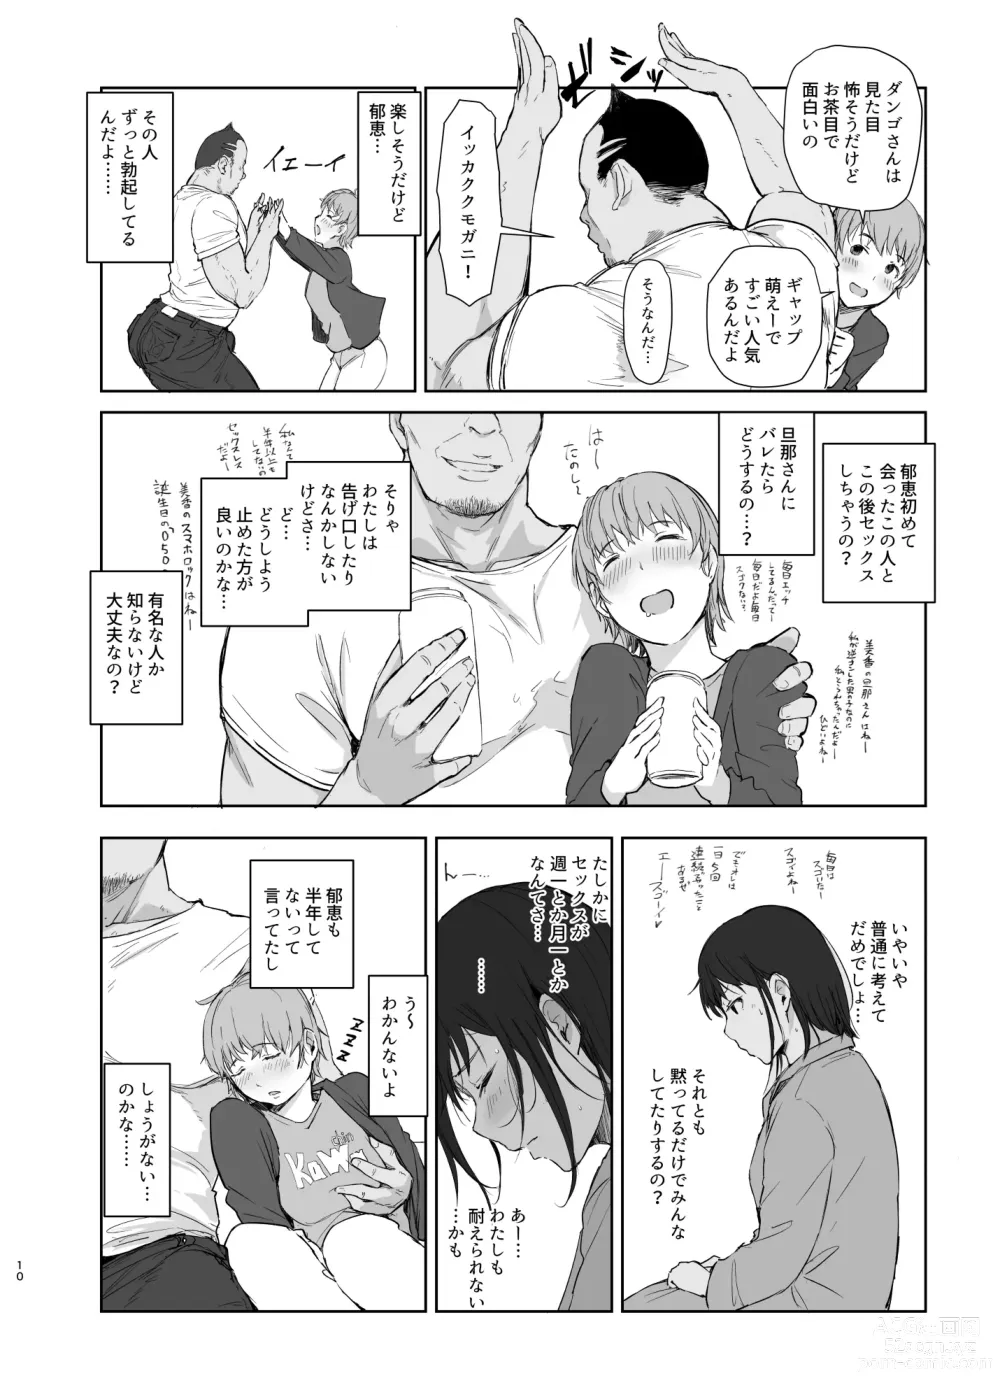 Page 9 of doujinshi Hitodzuma futari NTR no tabi